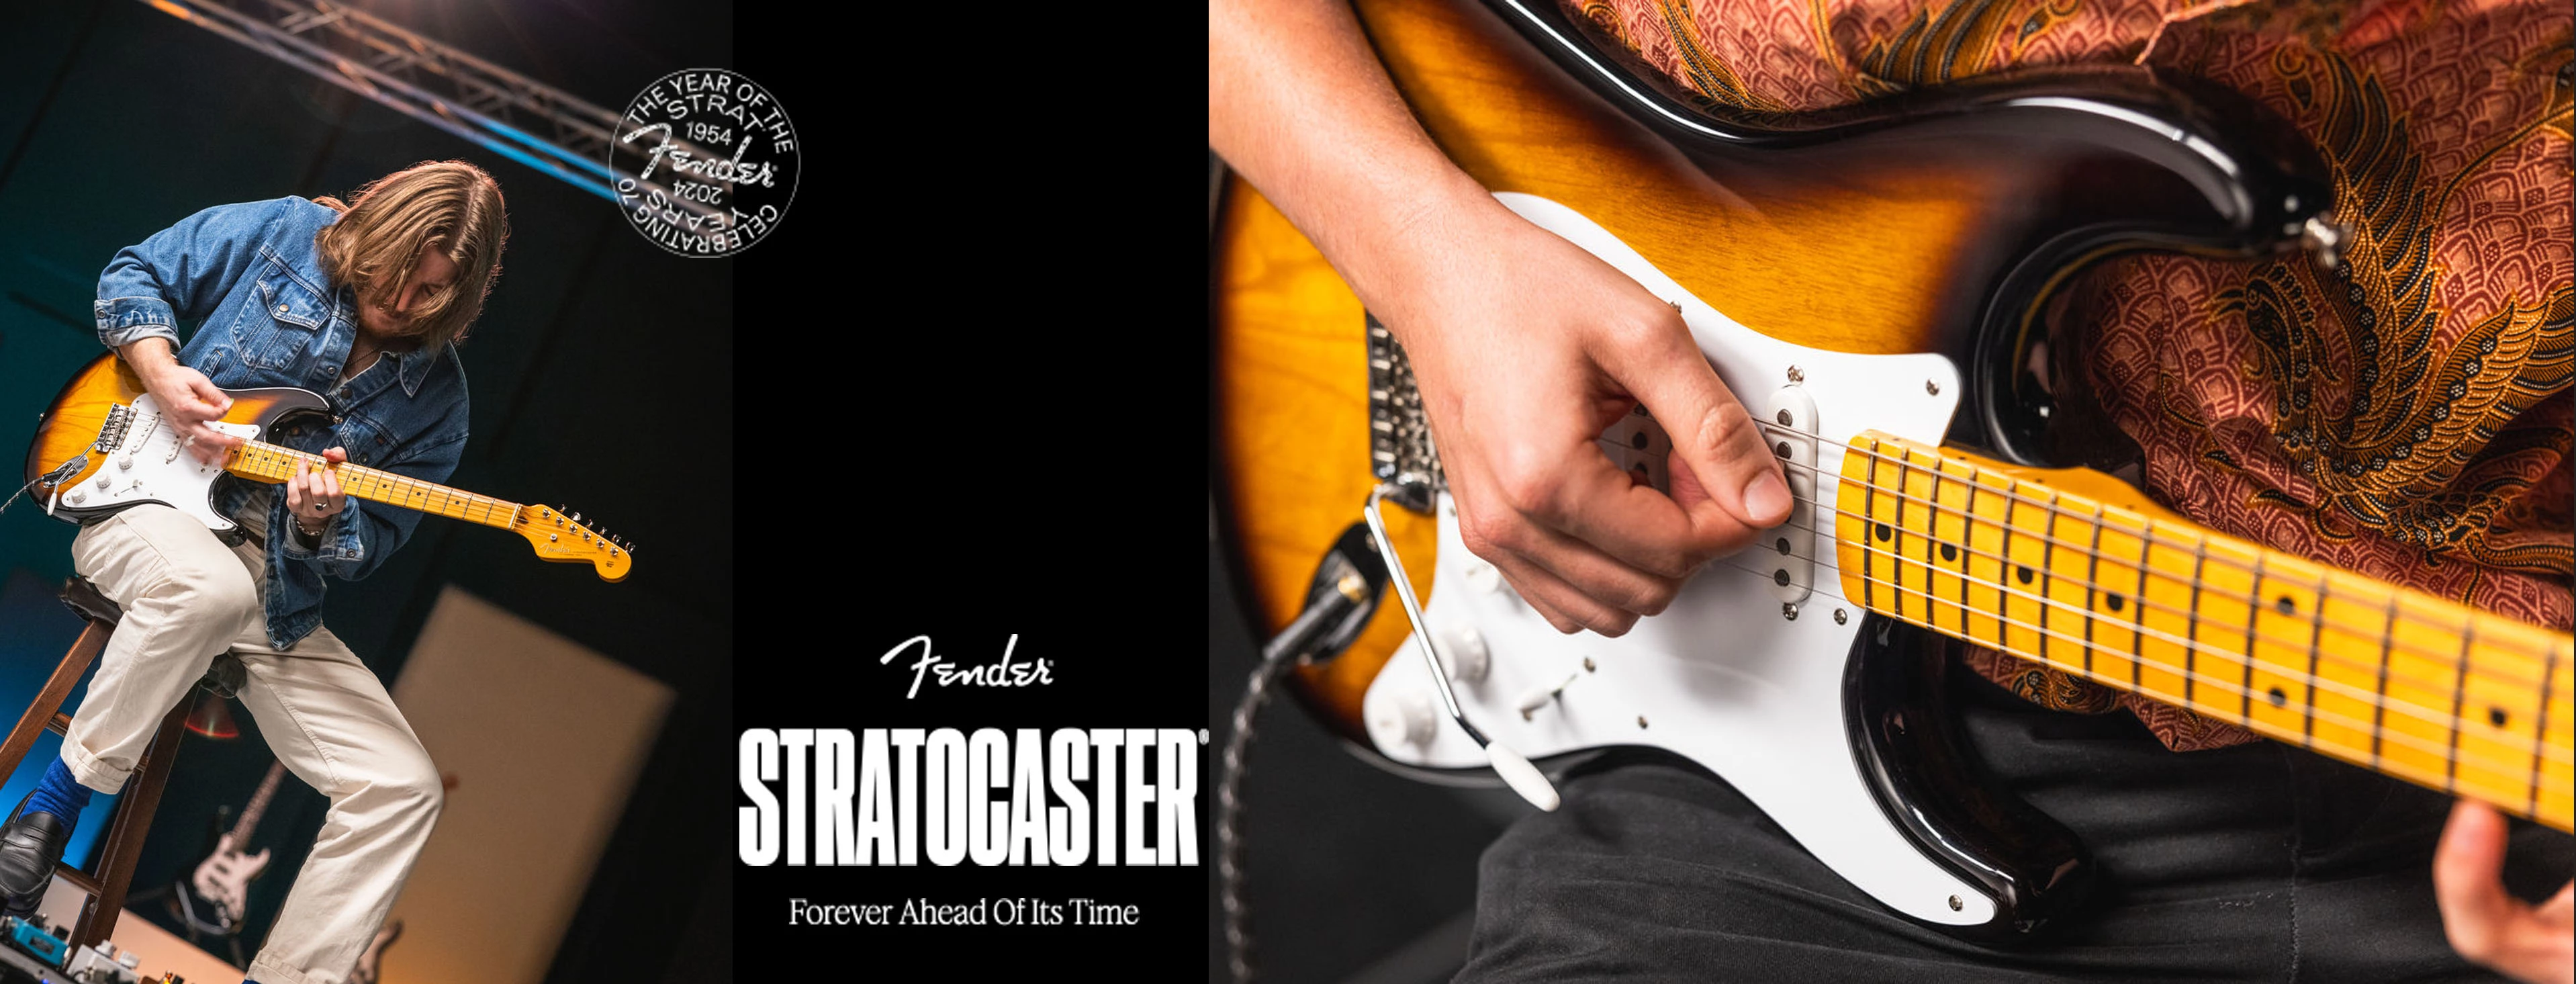 Stratocaster 70 jaar